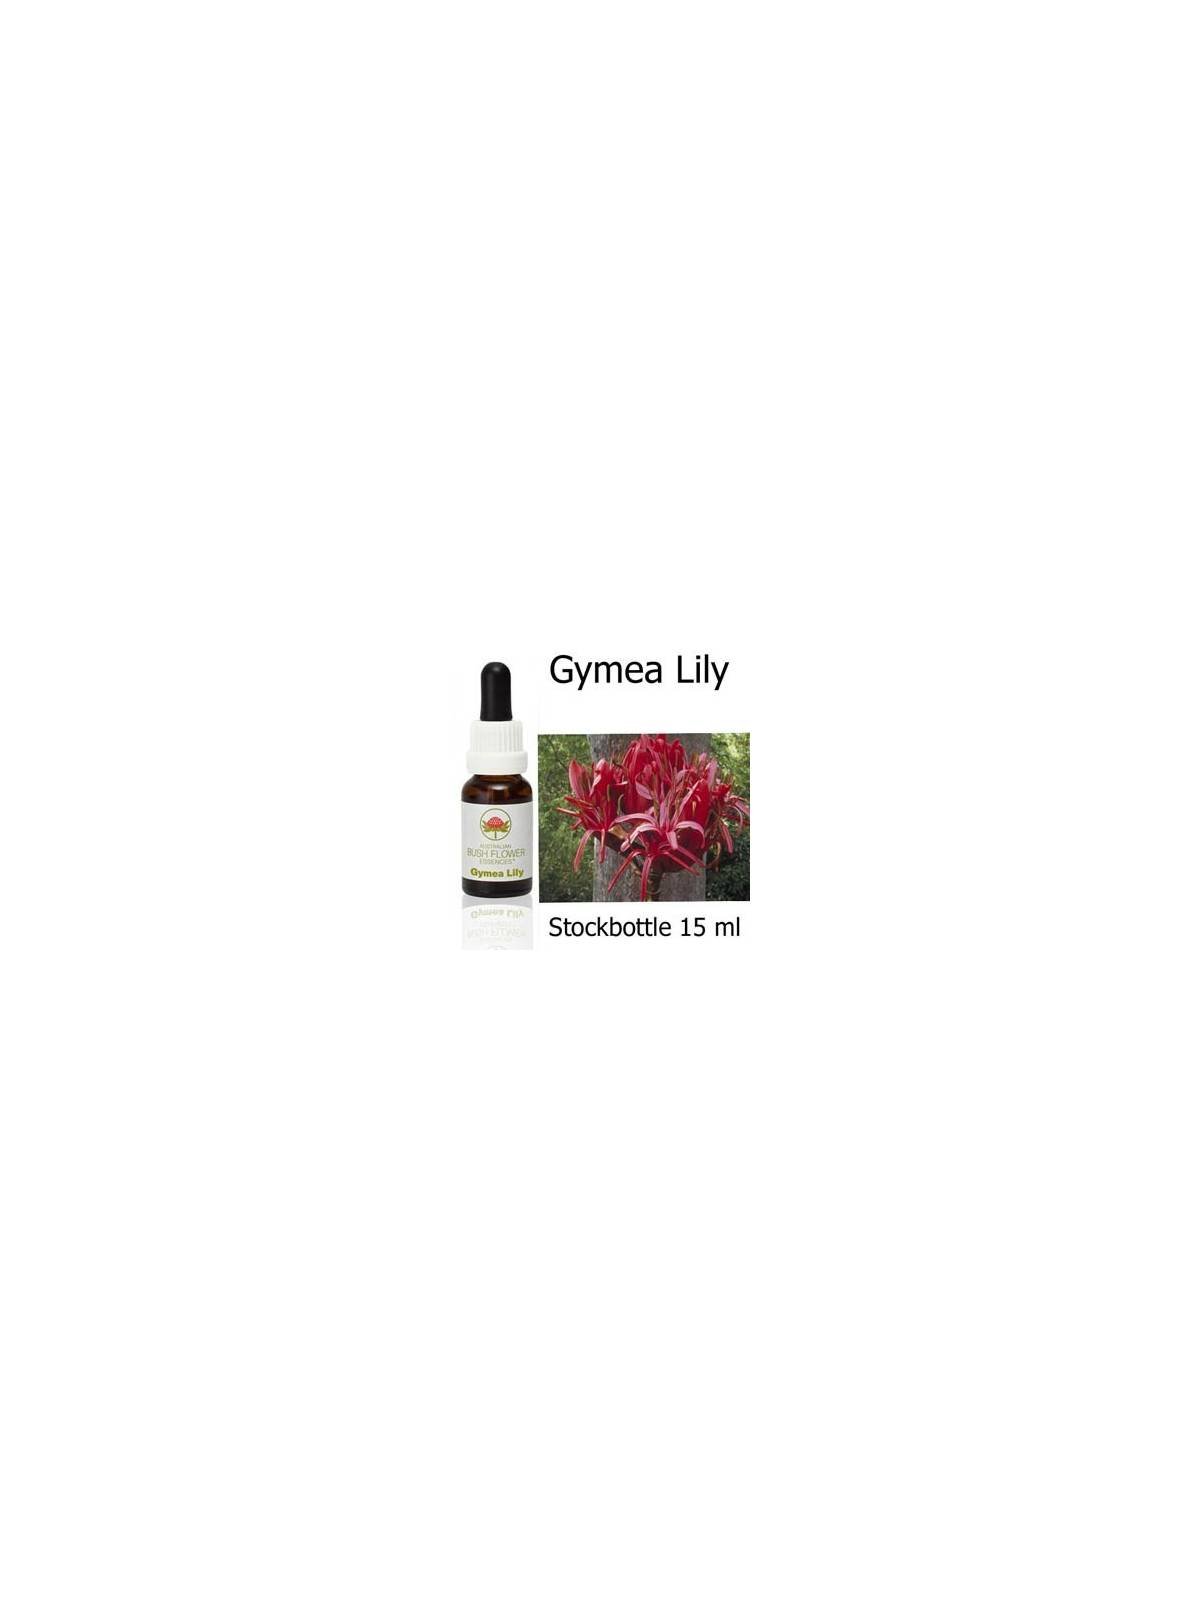 Gymea Lily Australische Buschblüten Stockbottle 15 ml Australian Bush Flower Essences